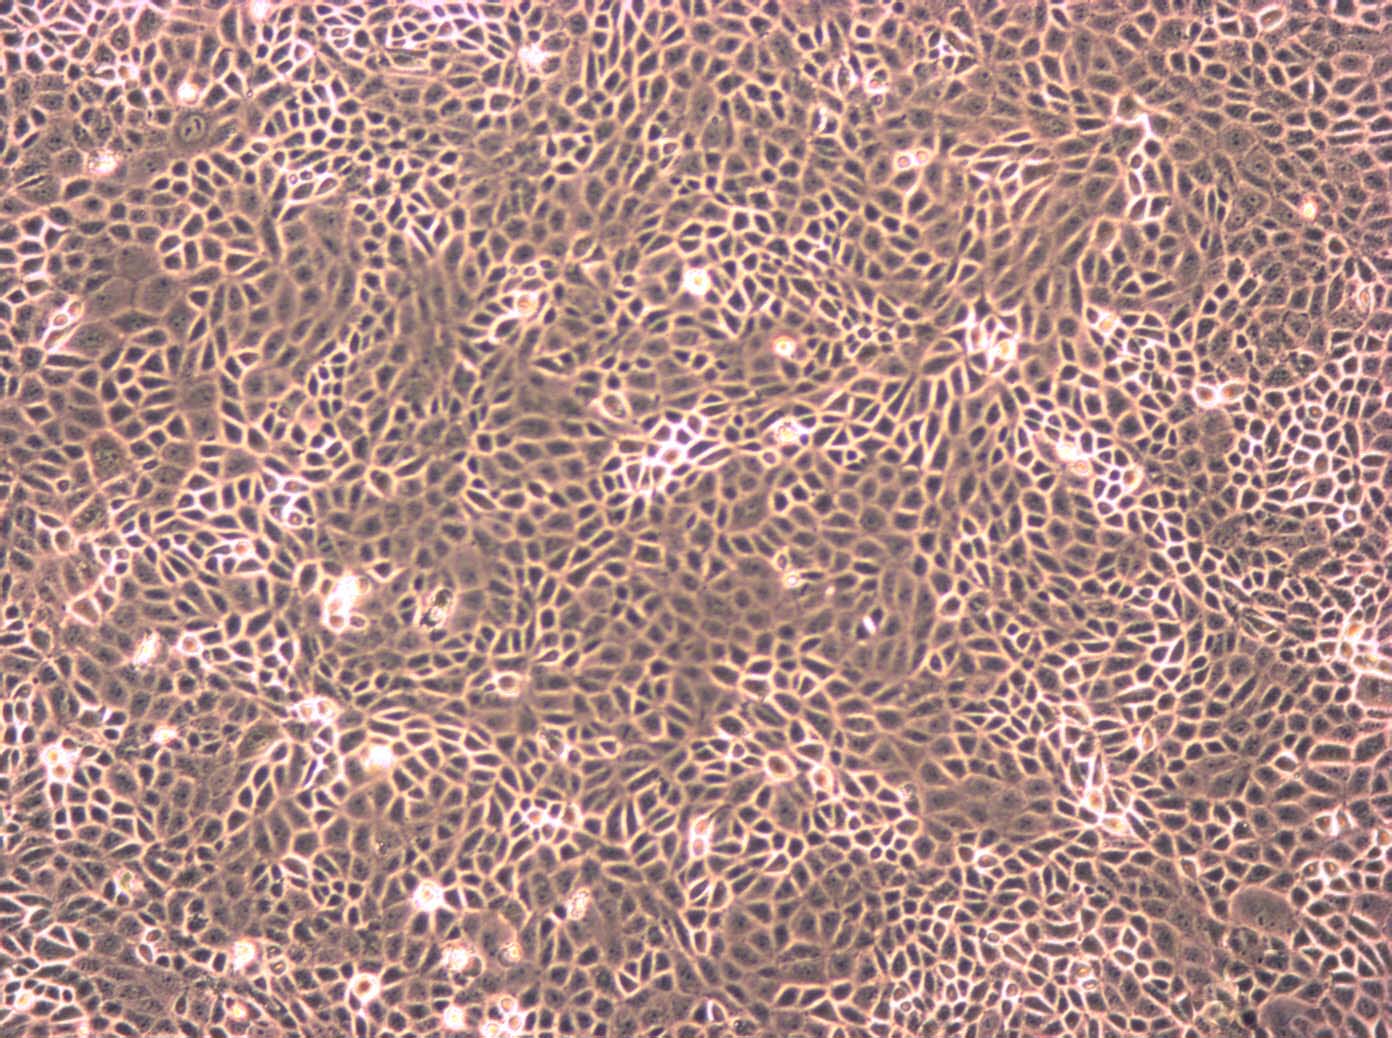 hs 68 Cells(赠送Str鉴定报告)|男性正常龟头细胞,hs 68 Cells